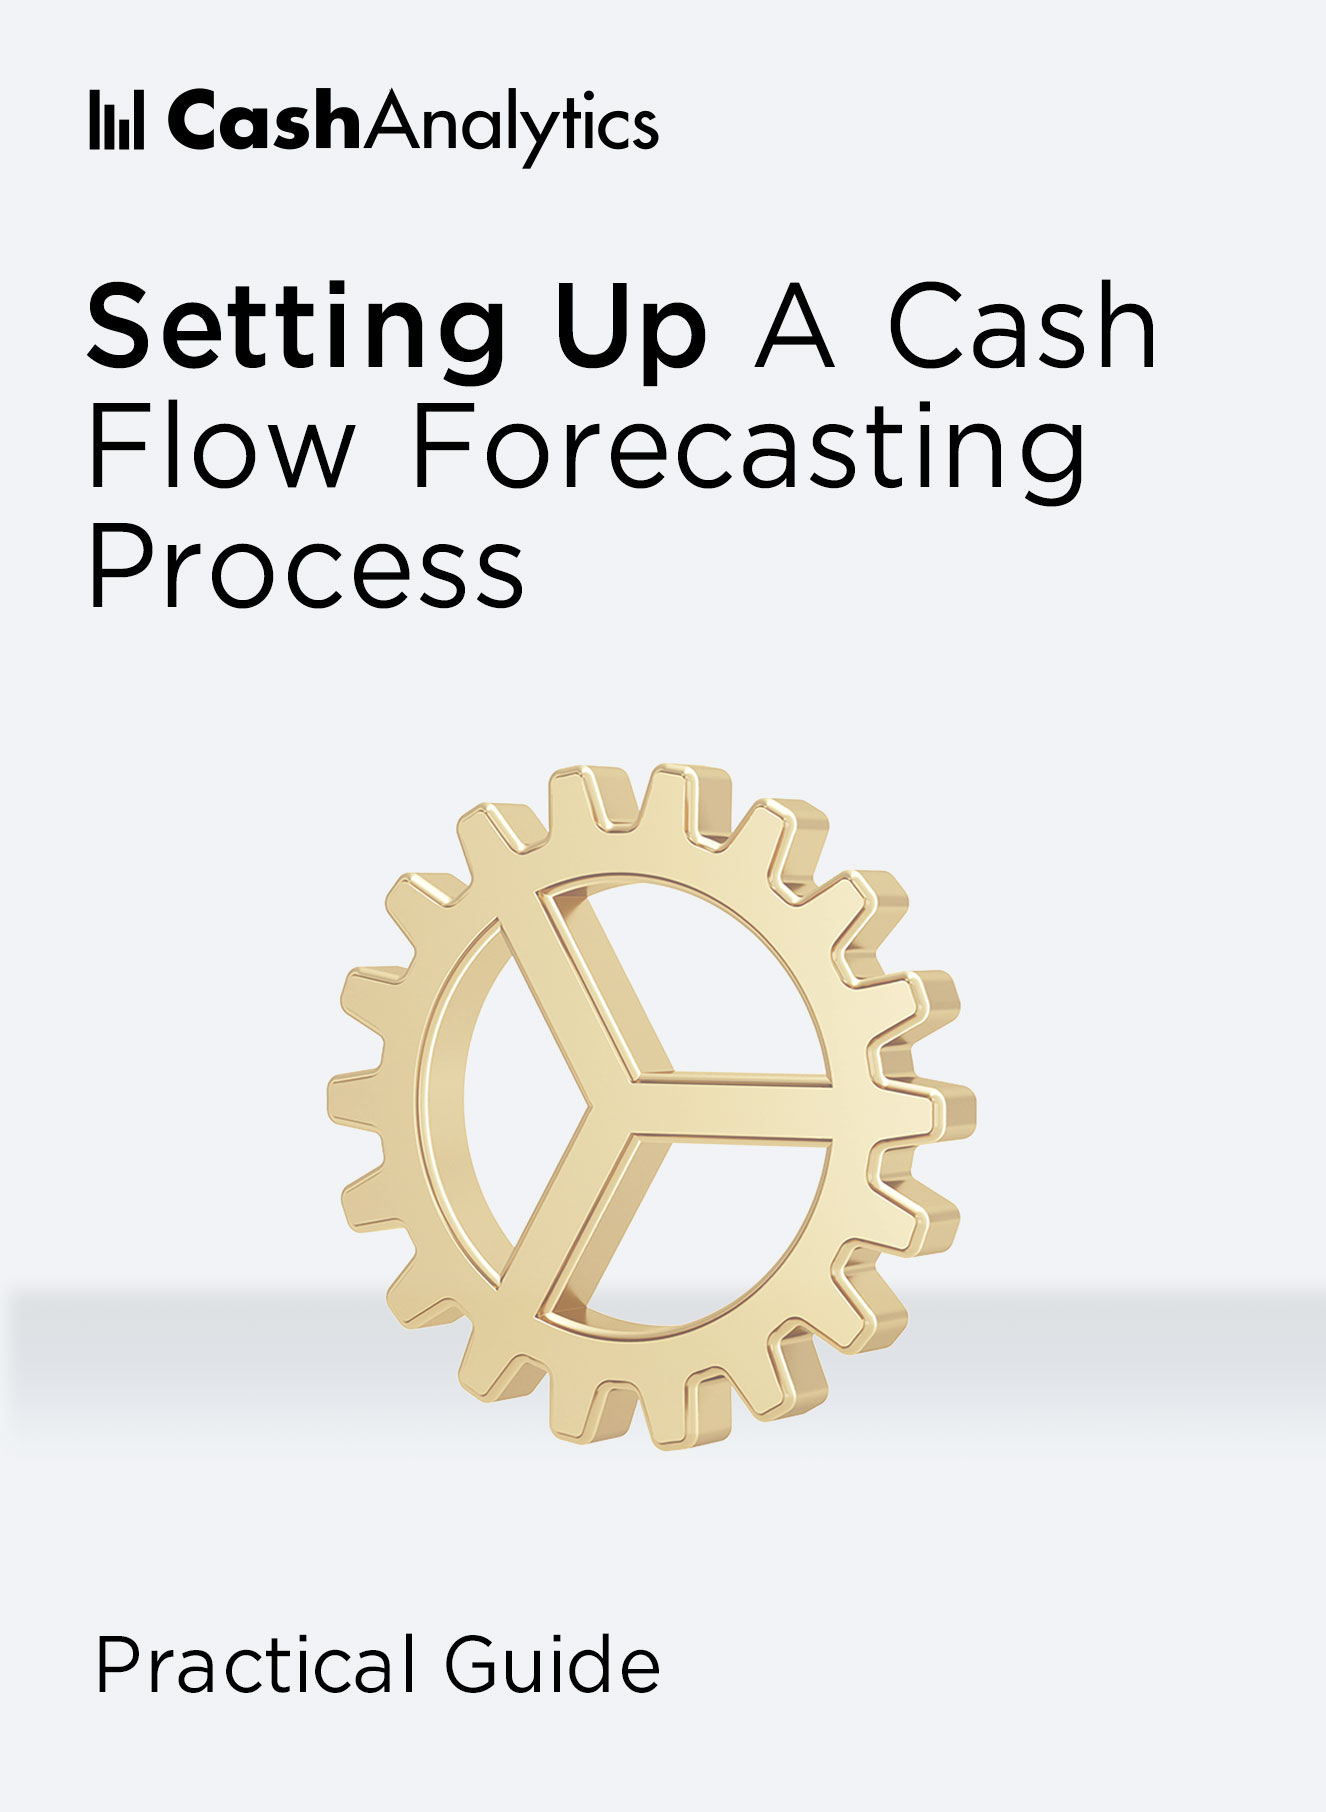 cashflow forecasting tools